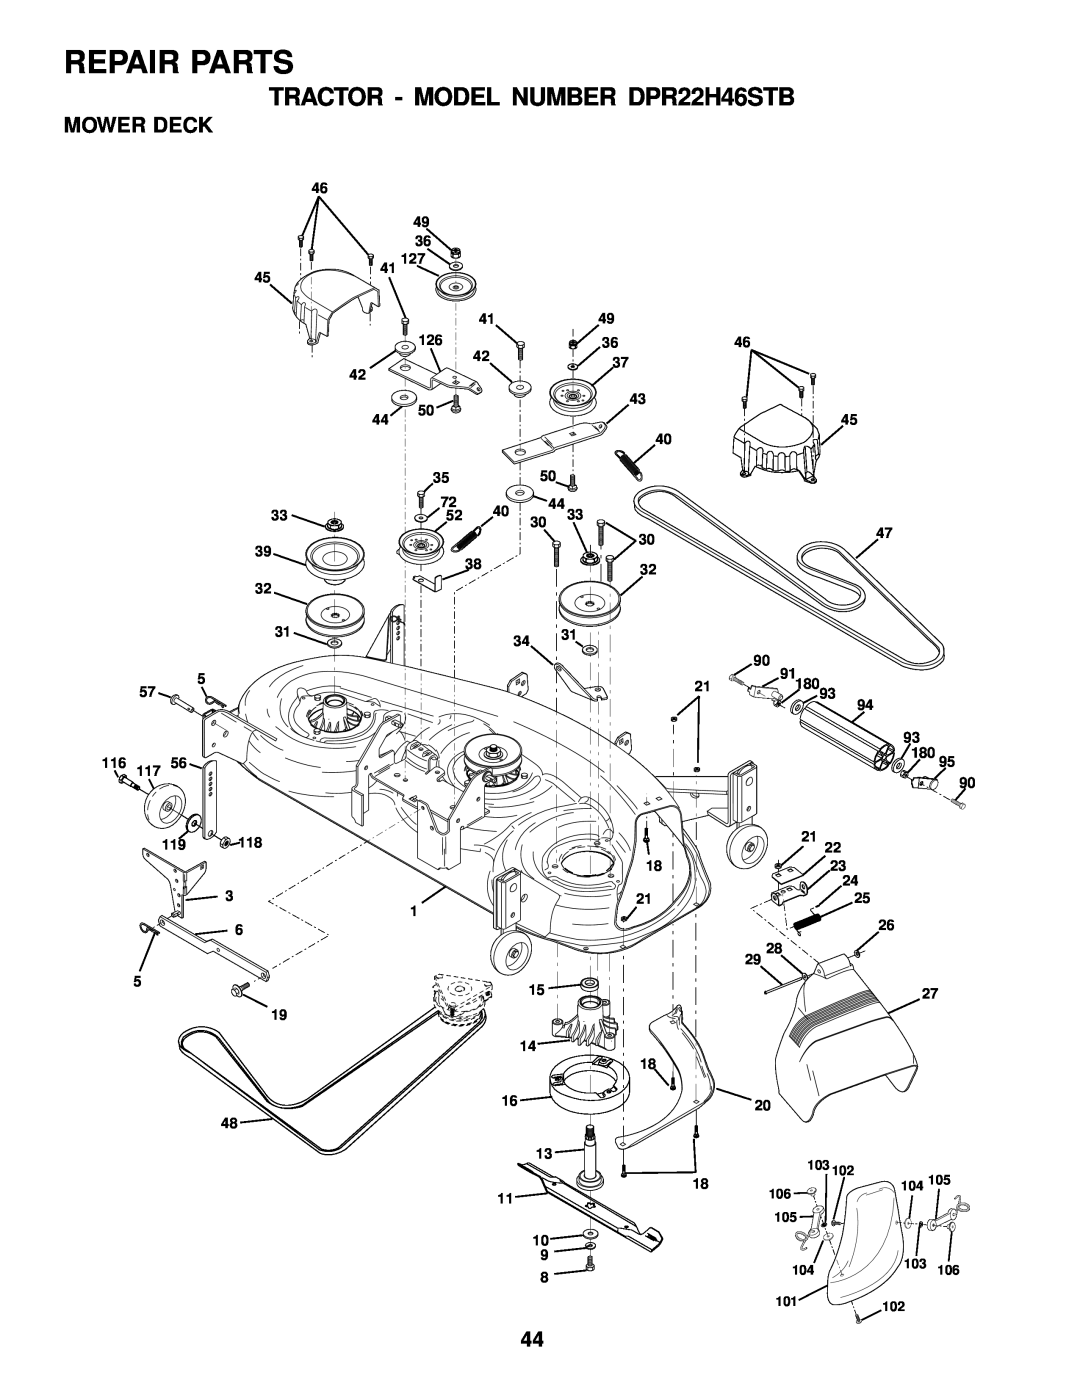 Poulan 178249 owner manual Mower Deck, Repair Parts, TRACTOR - MODEL NUMBER DPR22H46STB, 101102 